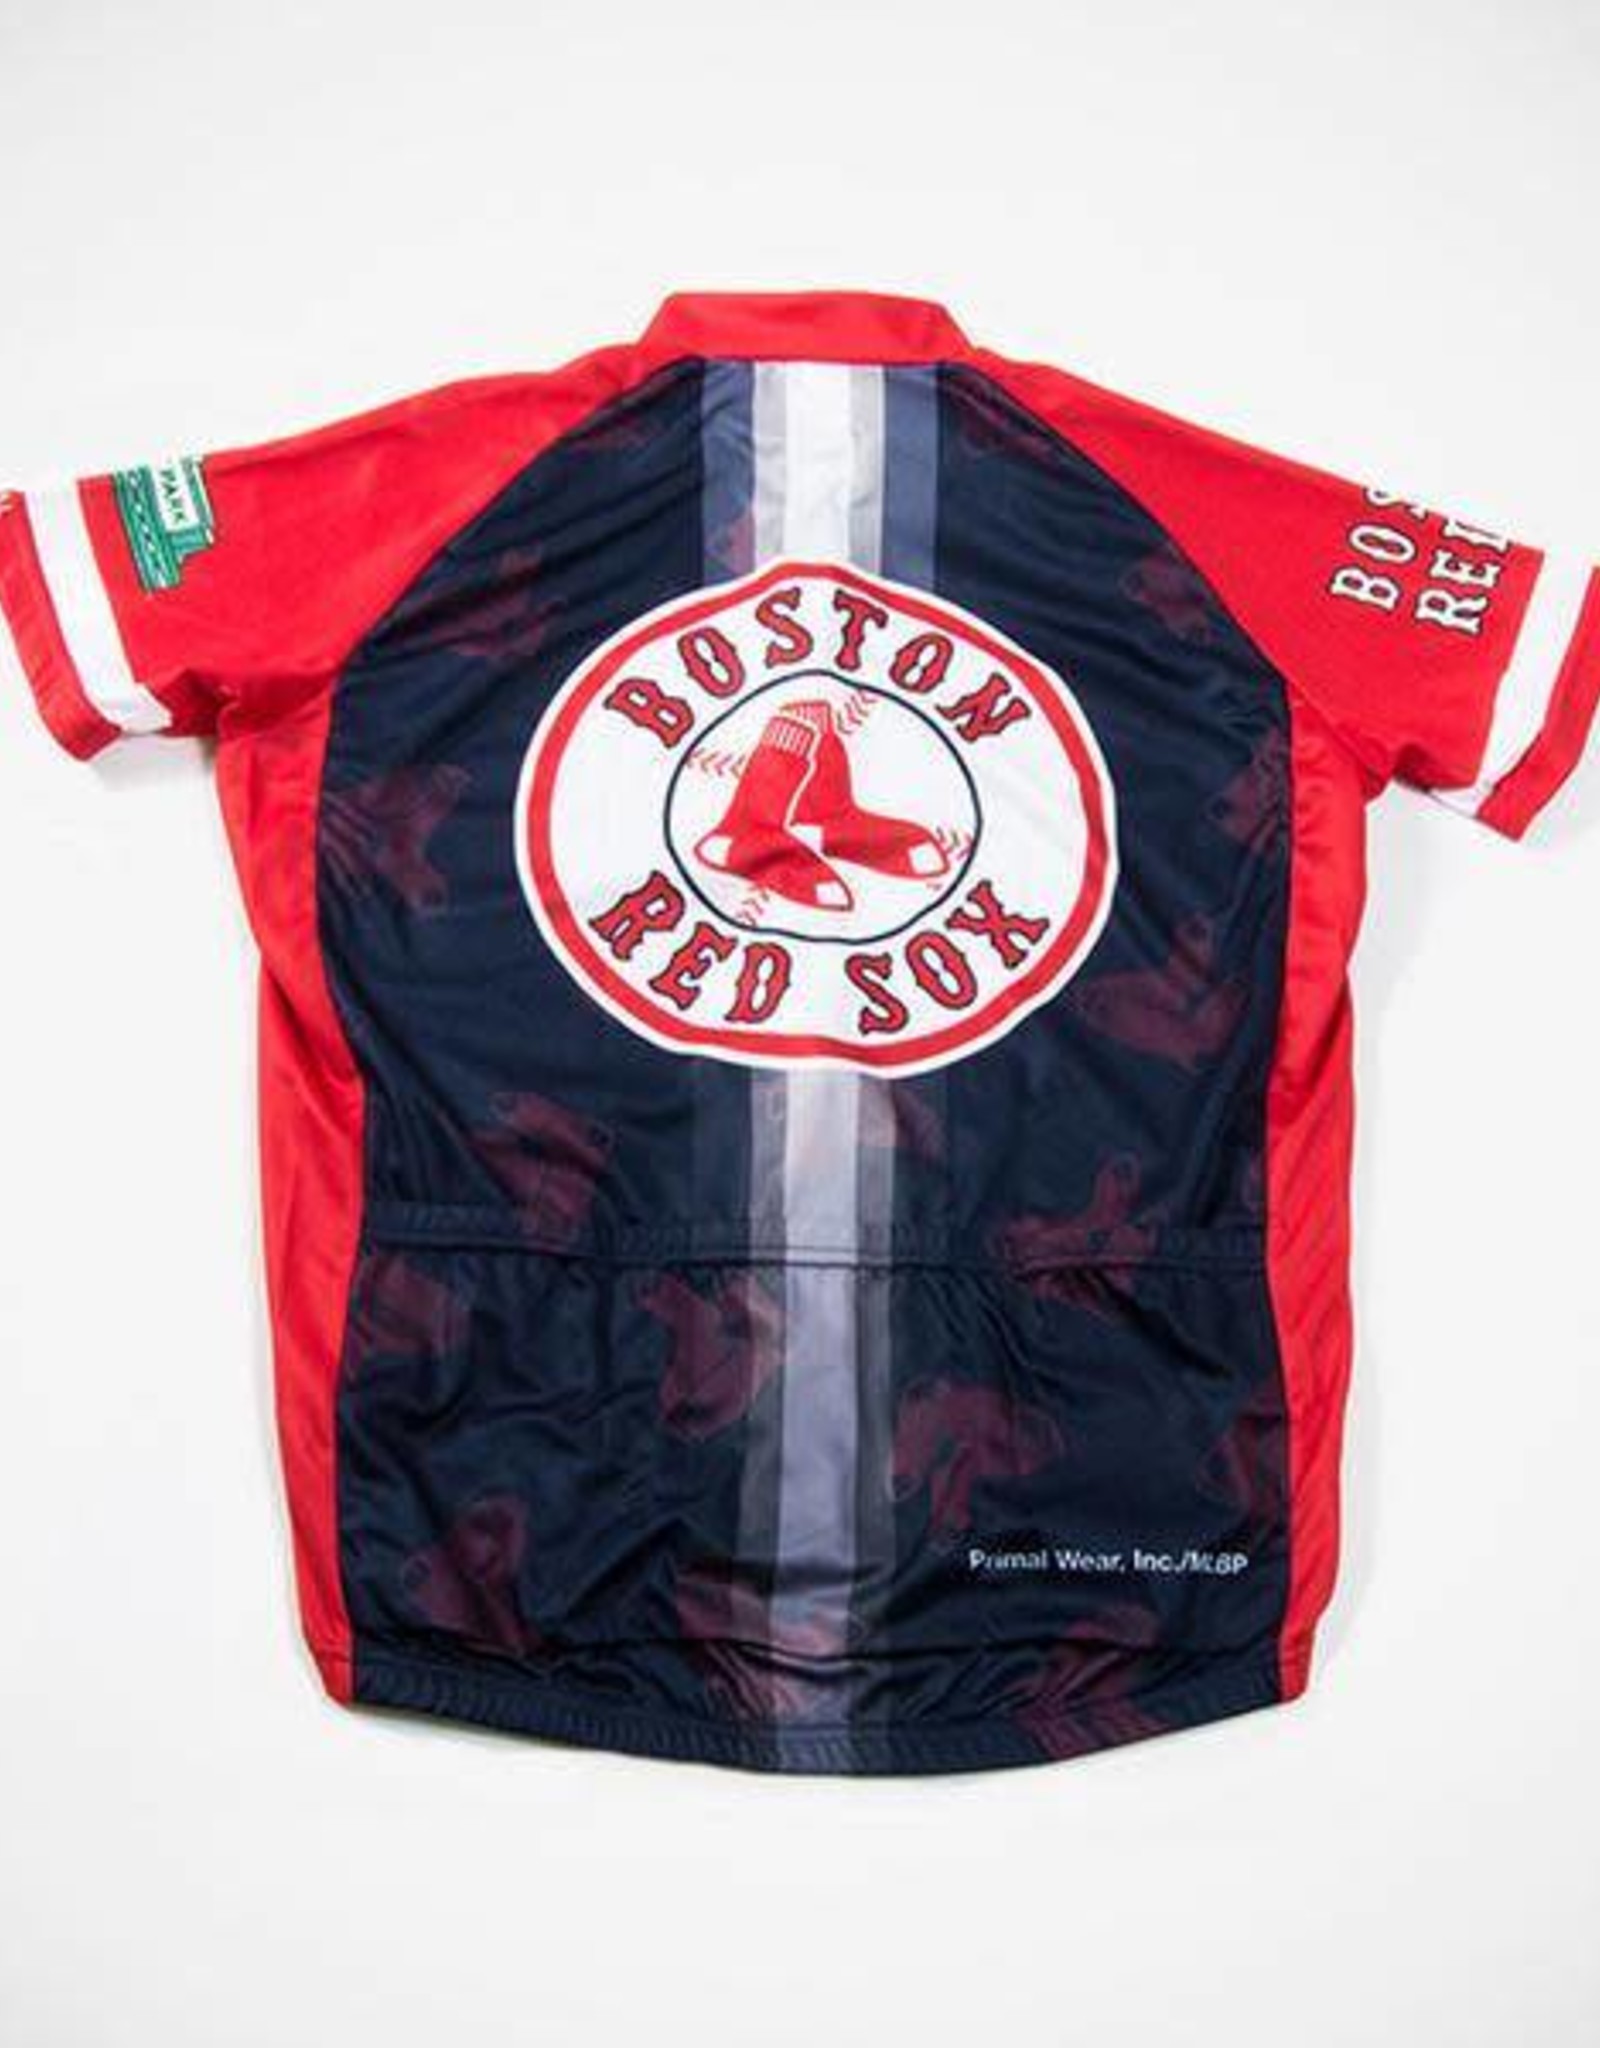 Salem Red Sox Gear, Red Sox Jerseys, Store, Pro Shop, Apparel